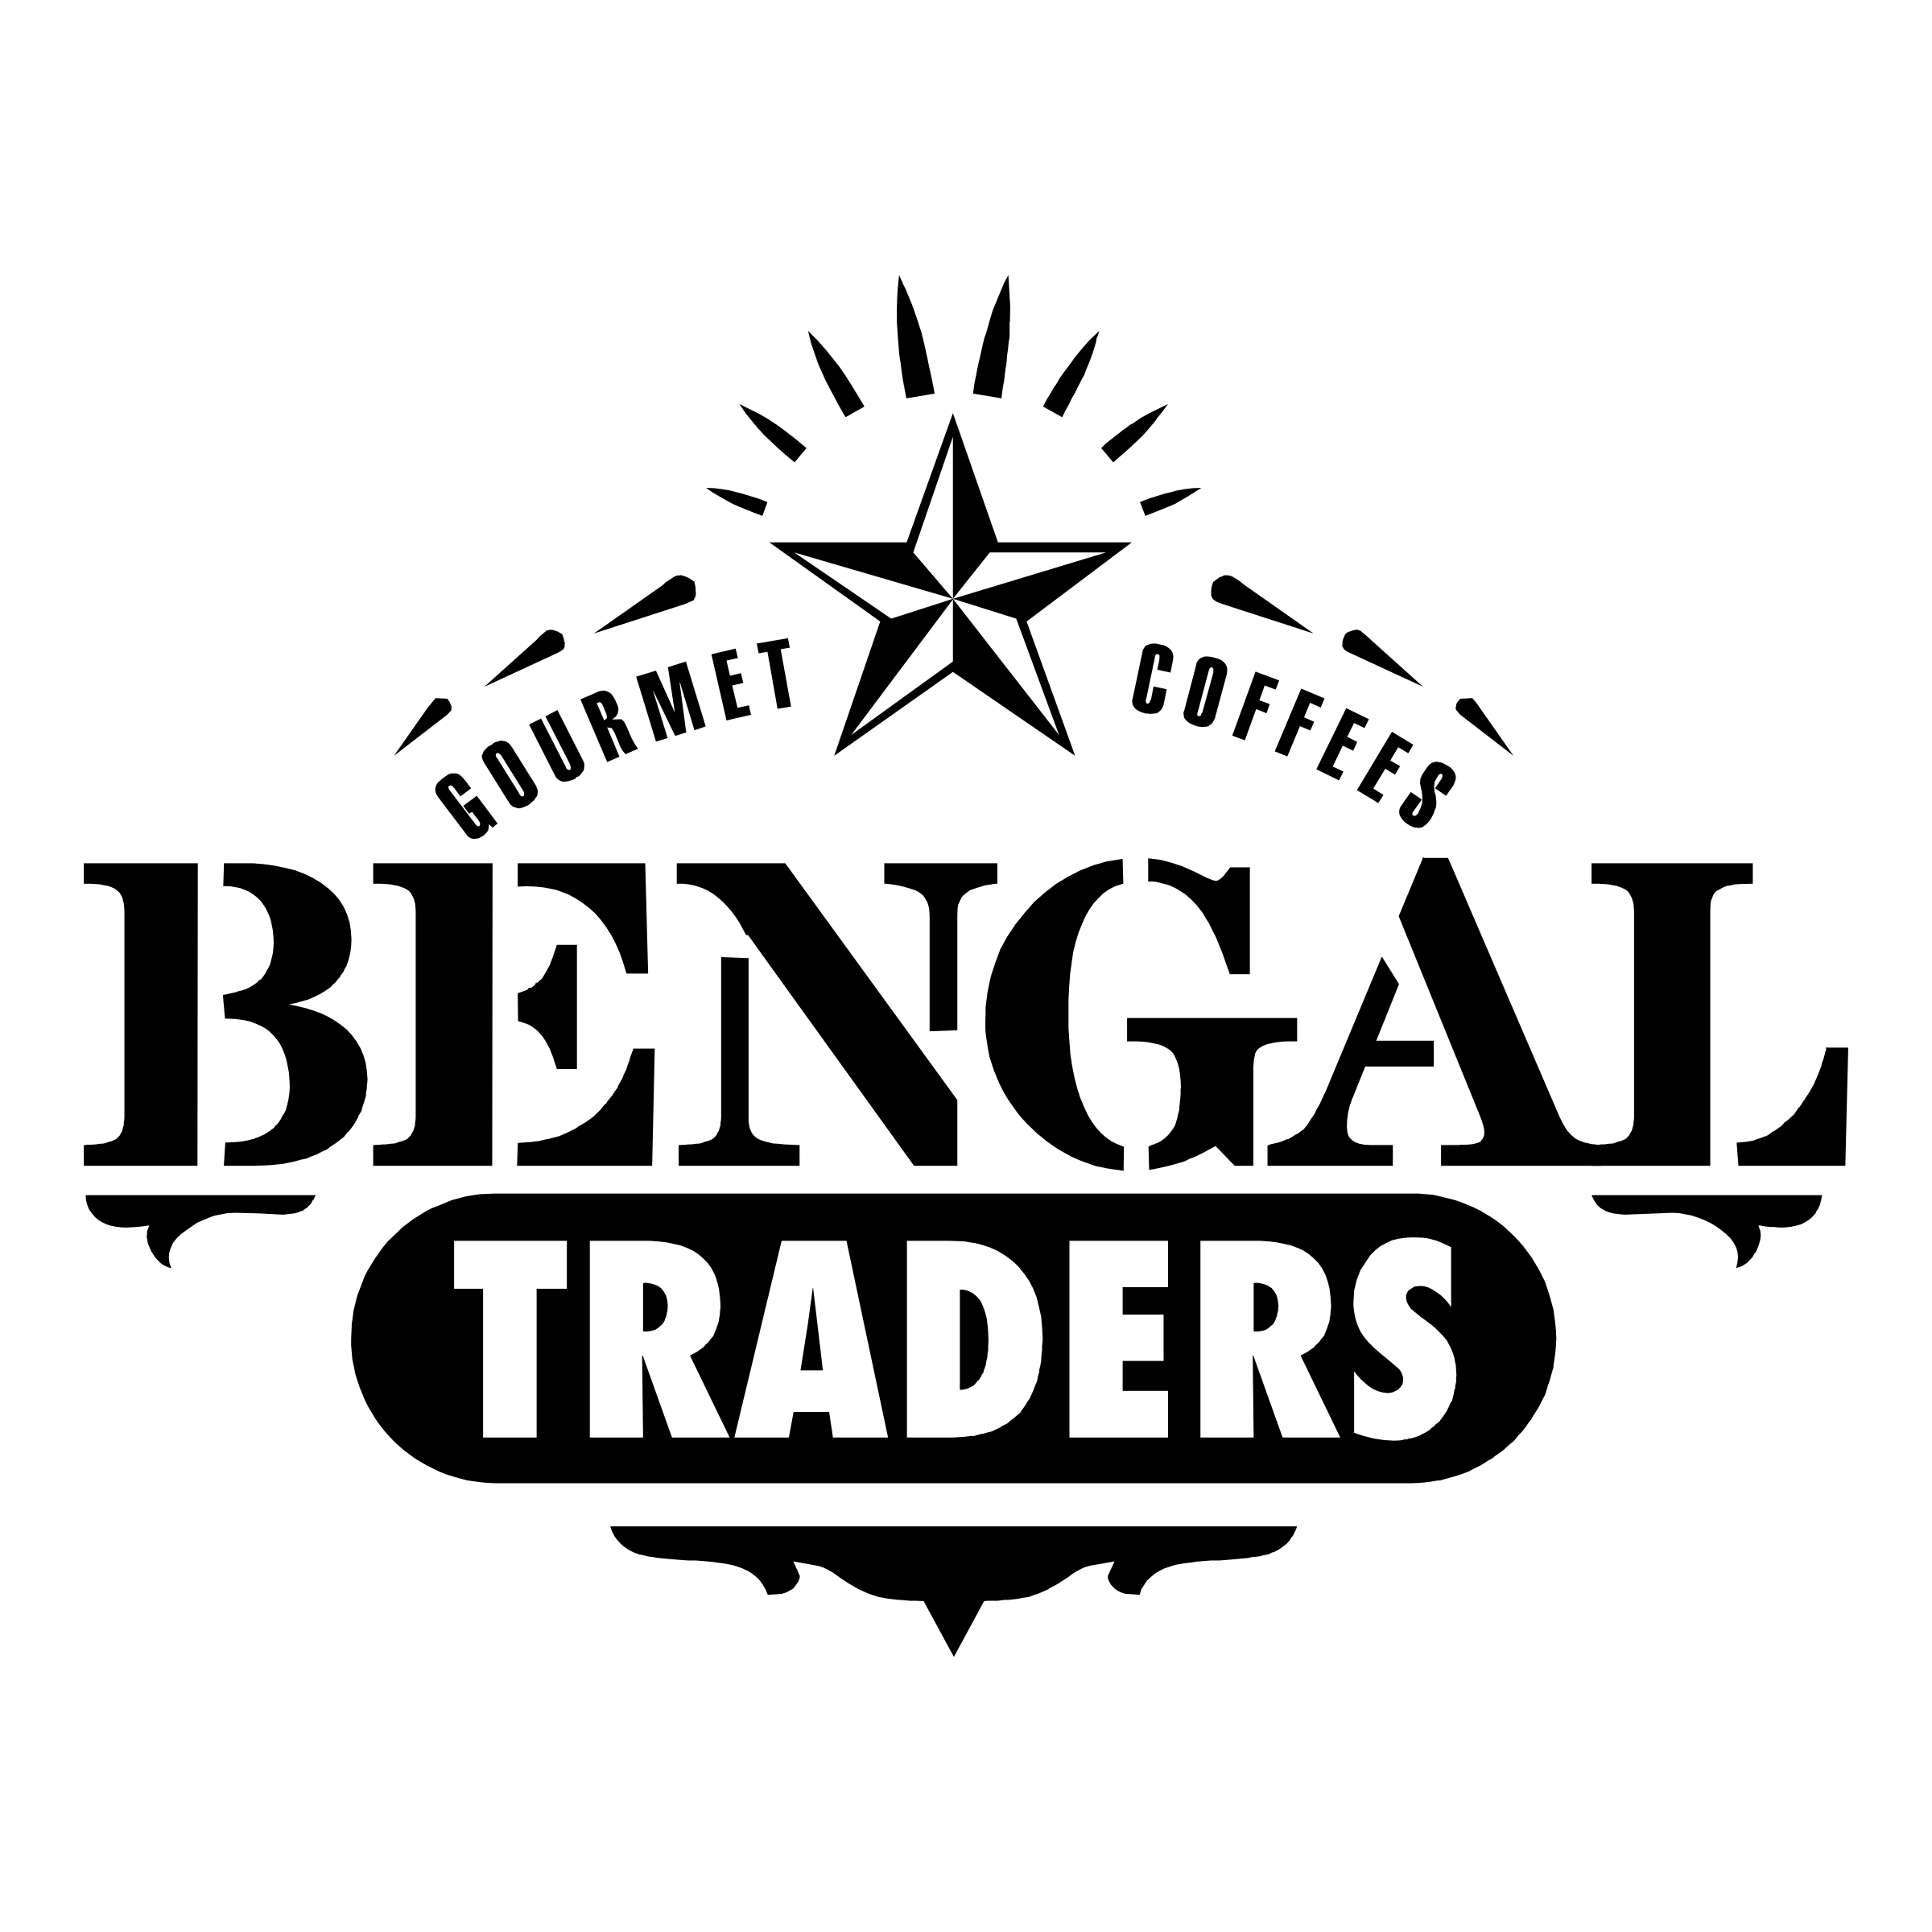 Traders Logo - Bengal Traders Logo PNG Transparent & SVG Vector